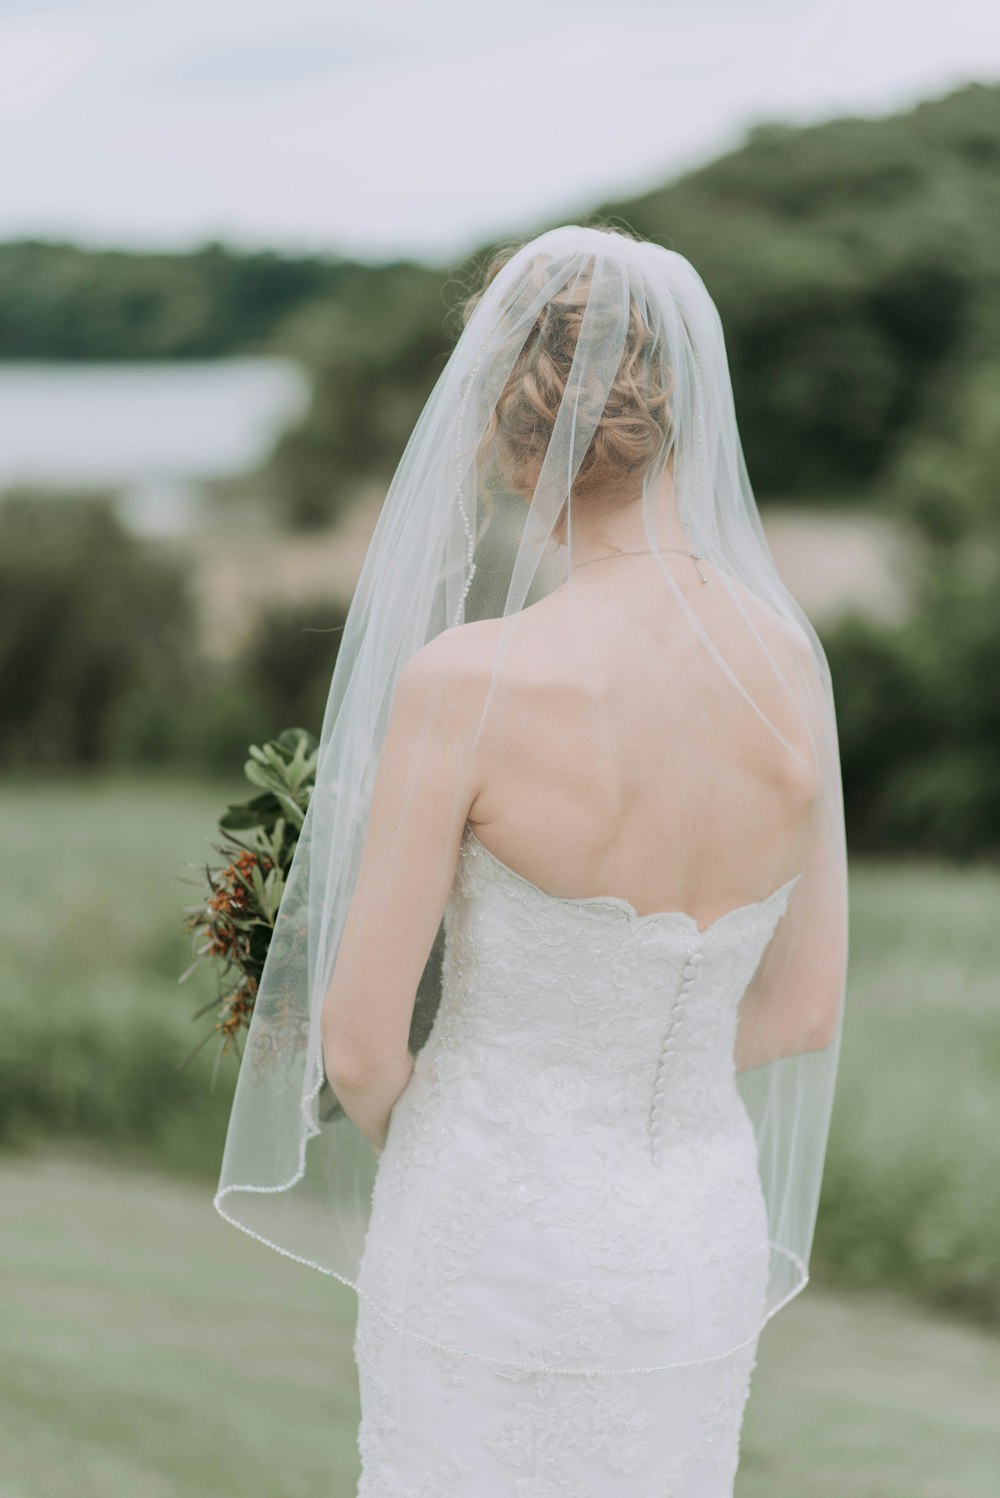 woman wearing white wedding dress holding bouquet